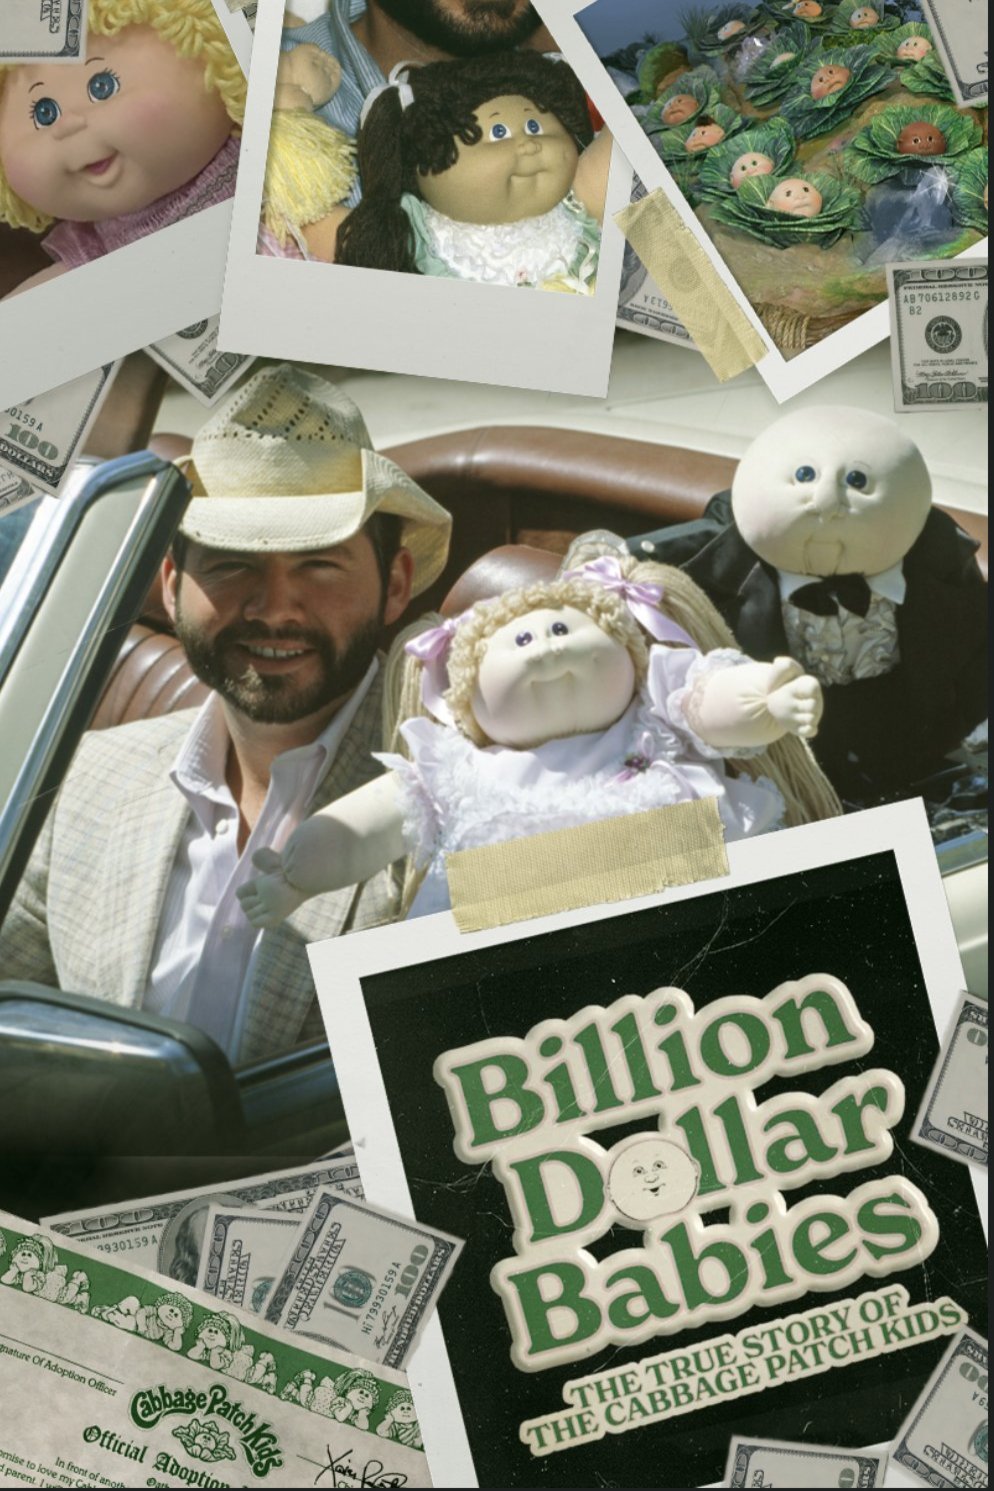 L'affiche du film Billion Dollar Babies: The True Story of the Cabbage Patch Kids